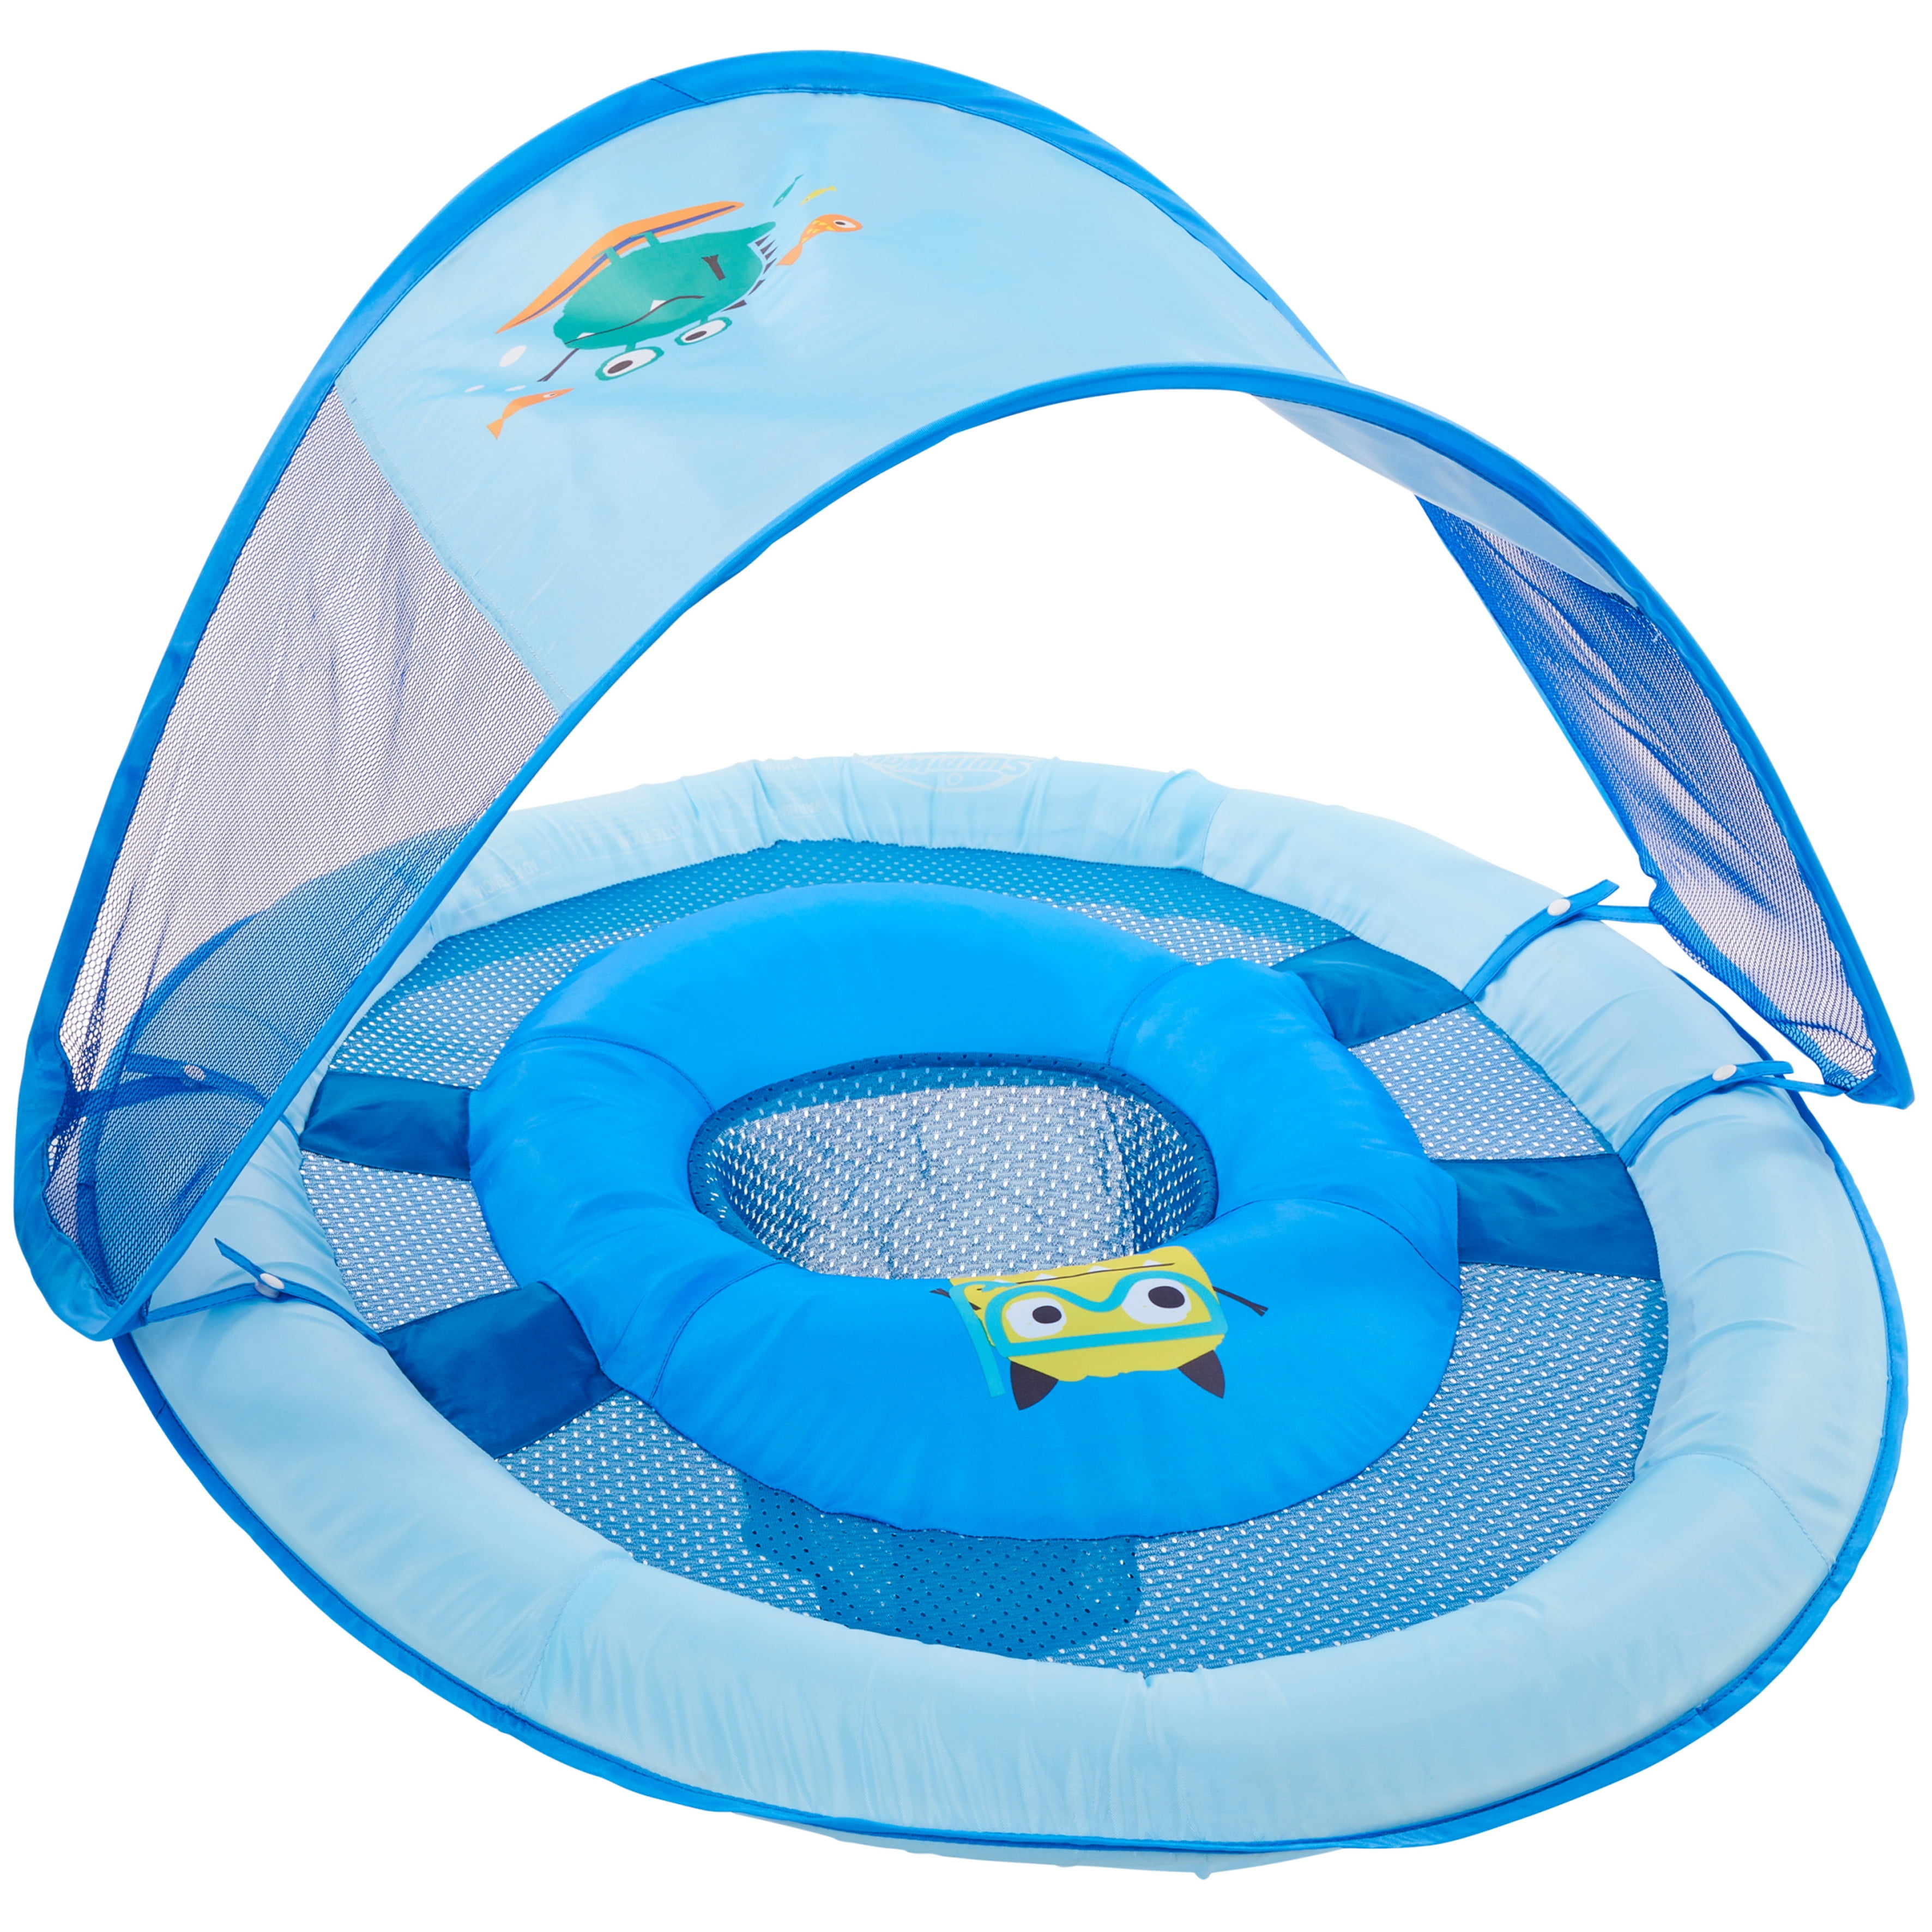 NIB SwimWays Sun Canopy Baby Boat Pink 9-24 months pool Summer fun Float boys 